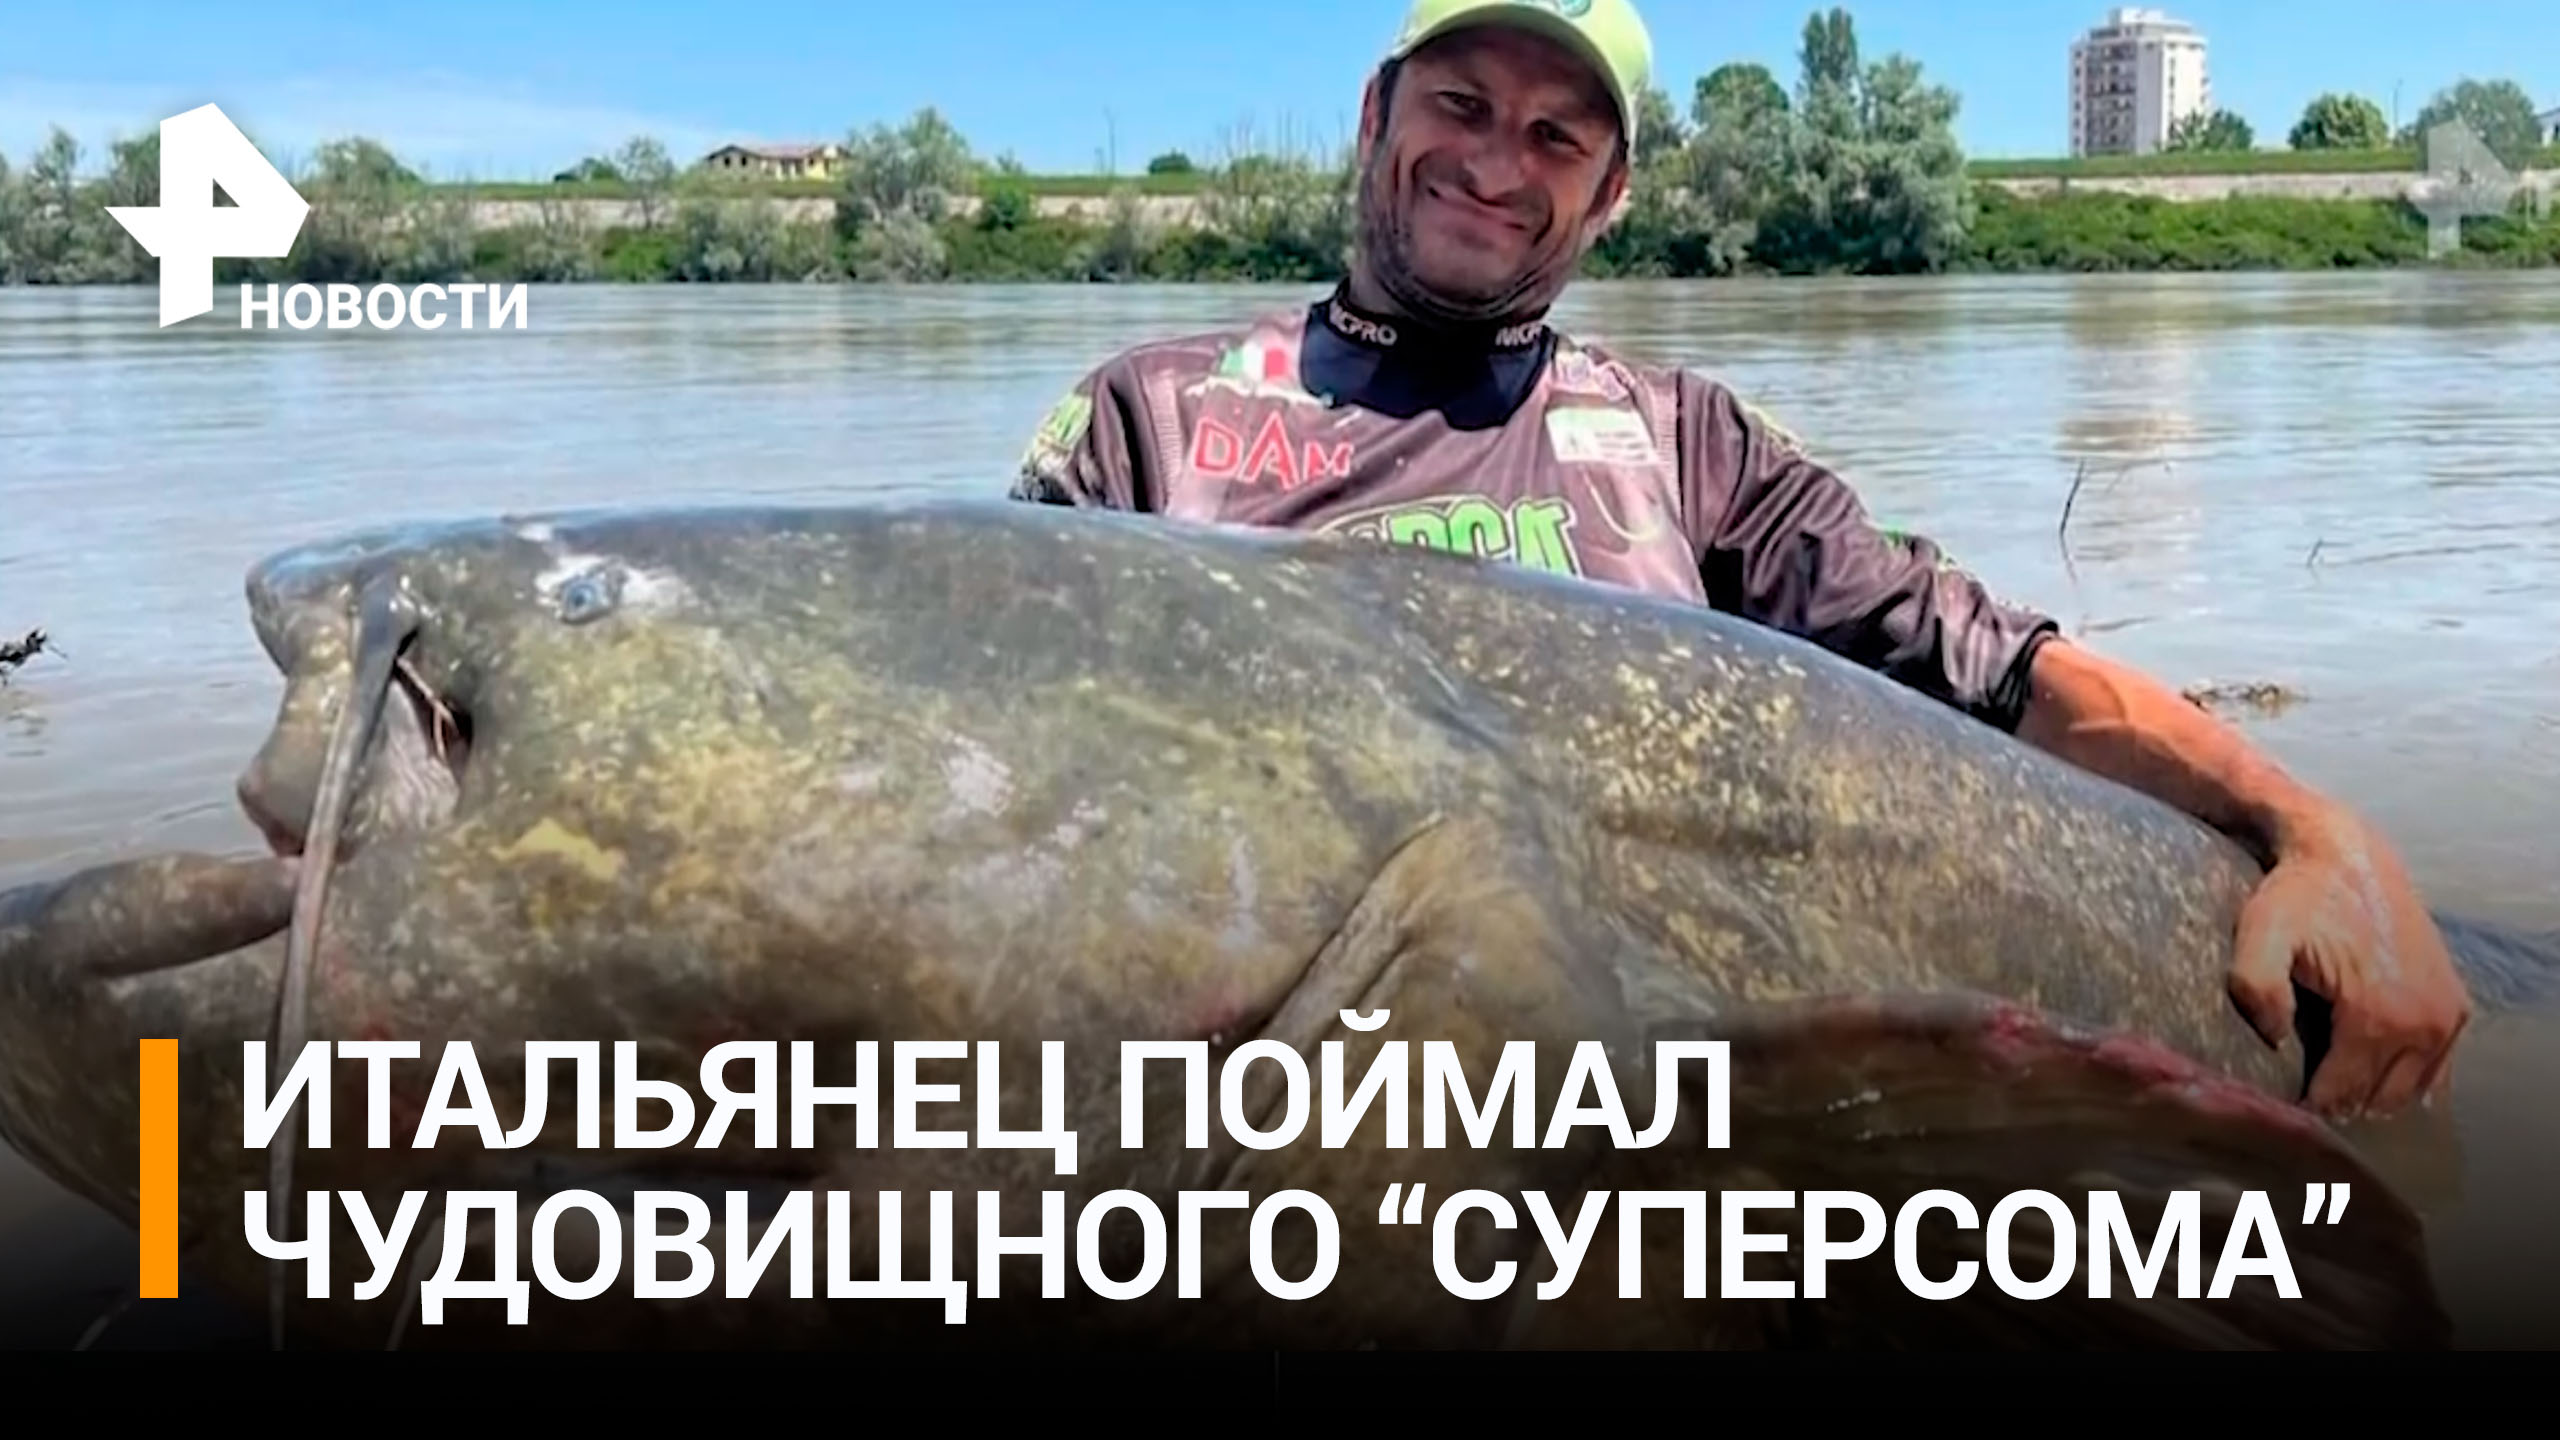 Итальянец поймал огромного "суперсома" в реке / РЕН Новости